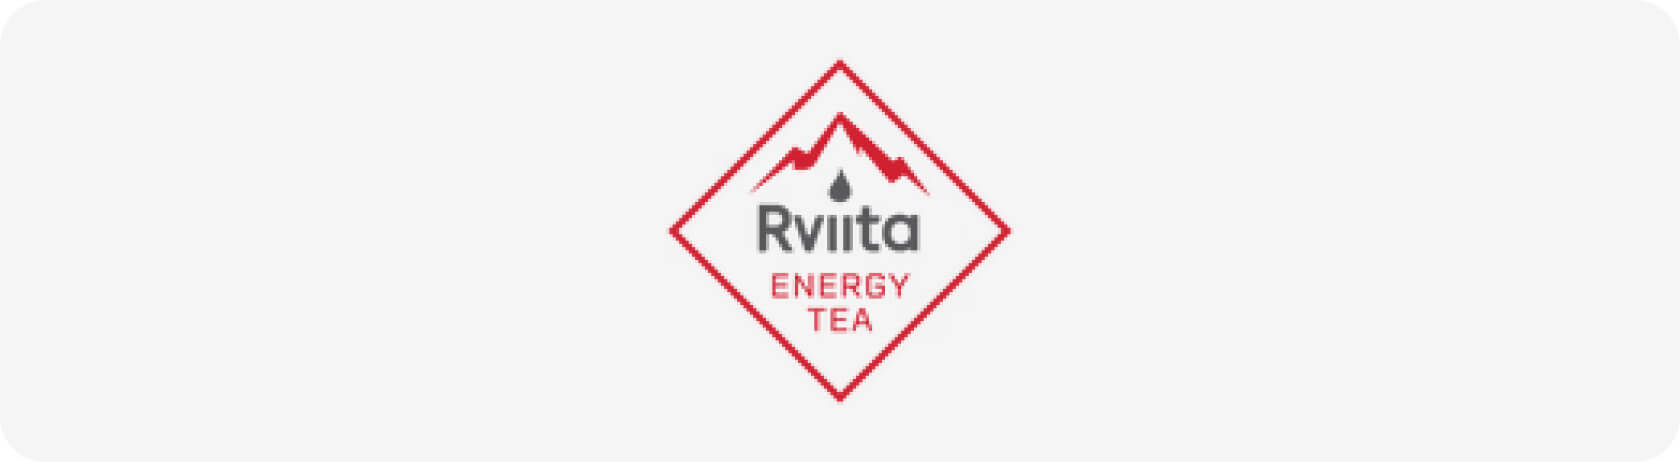 Logo du thé Rviita Enery sur fond gris.